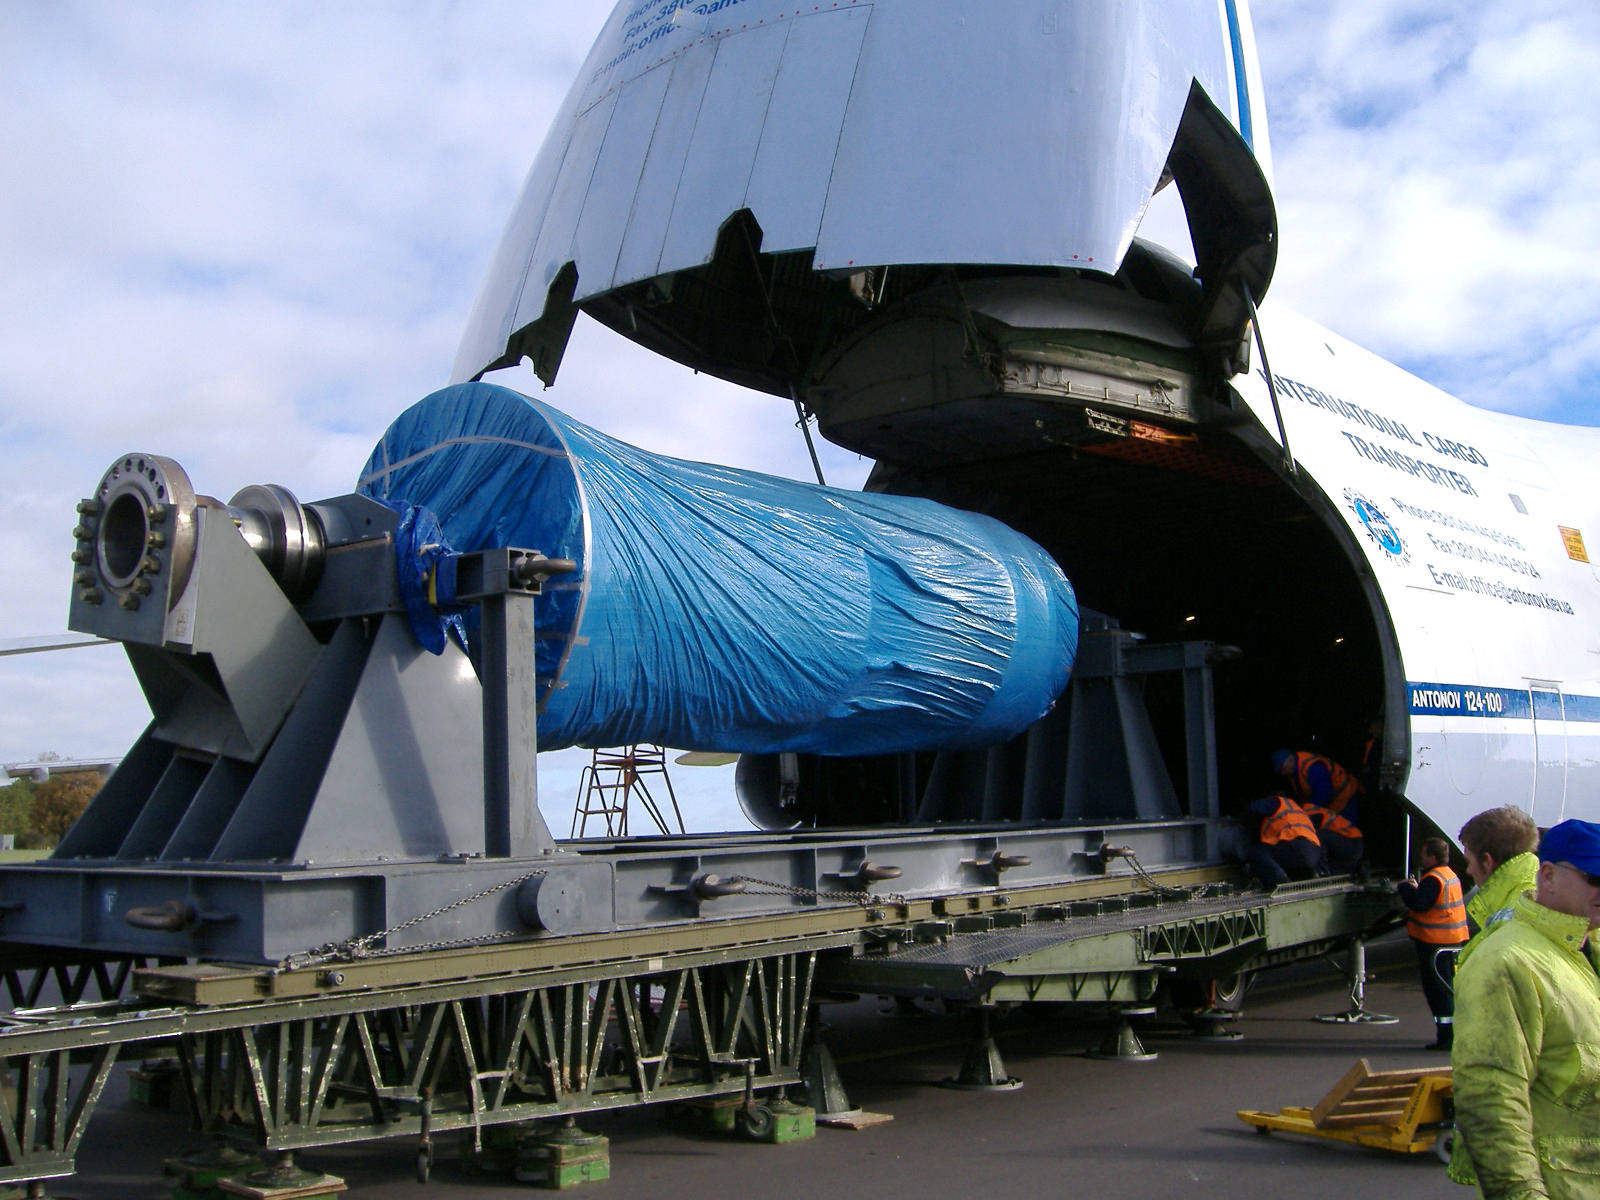 Project Cargo - Loading an Antanov